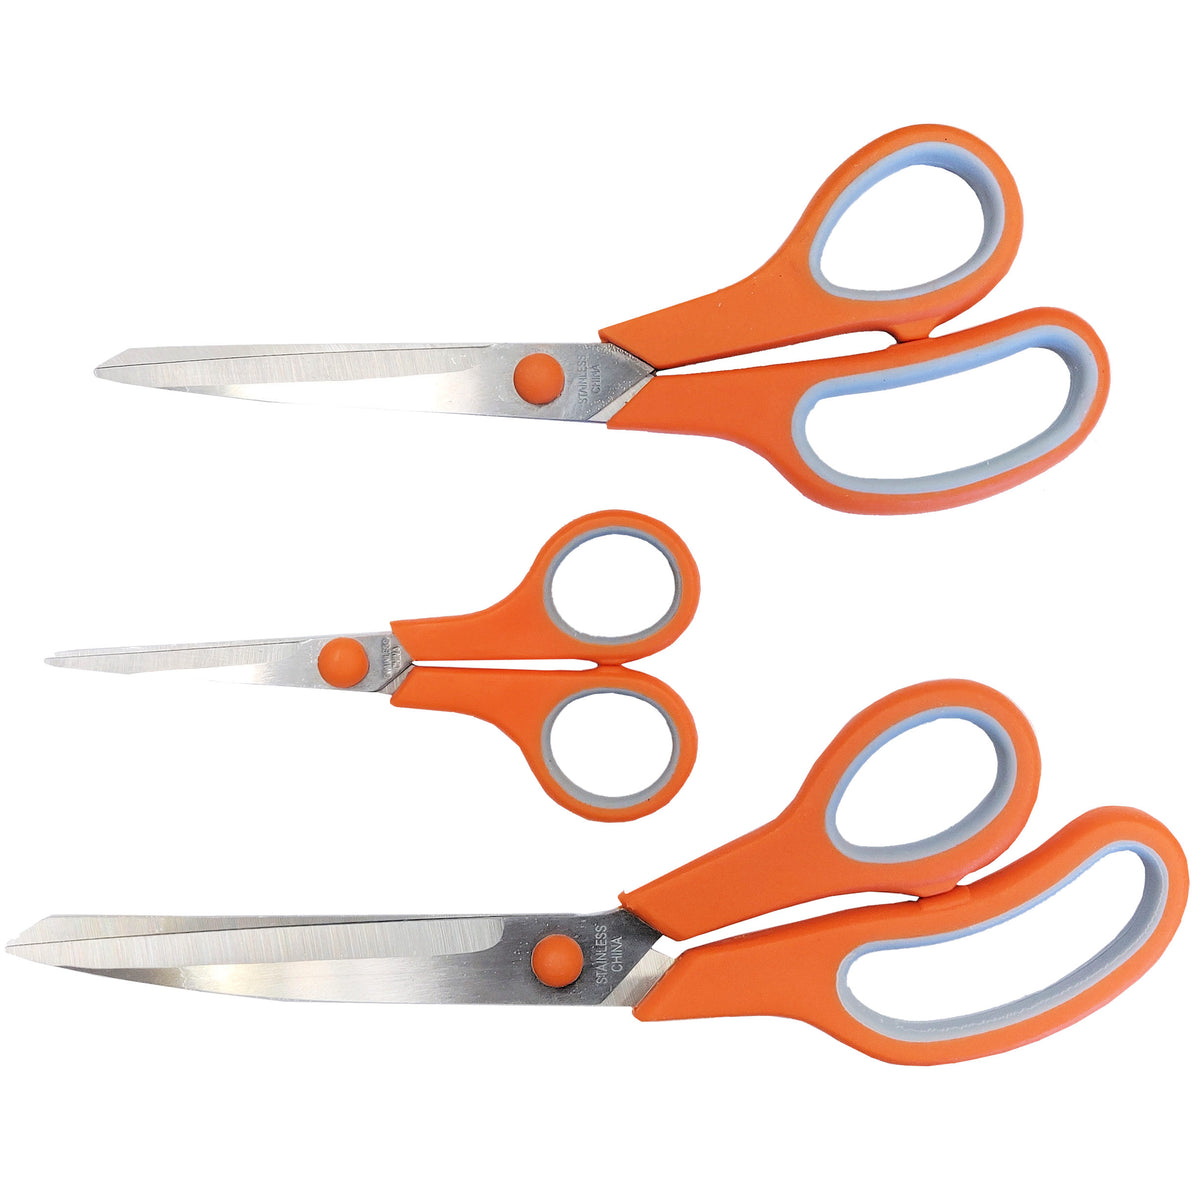  Small Scissors All Purpose, Sharp Mini Detail Craft Scissors  Set